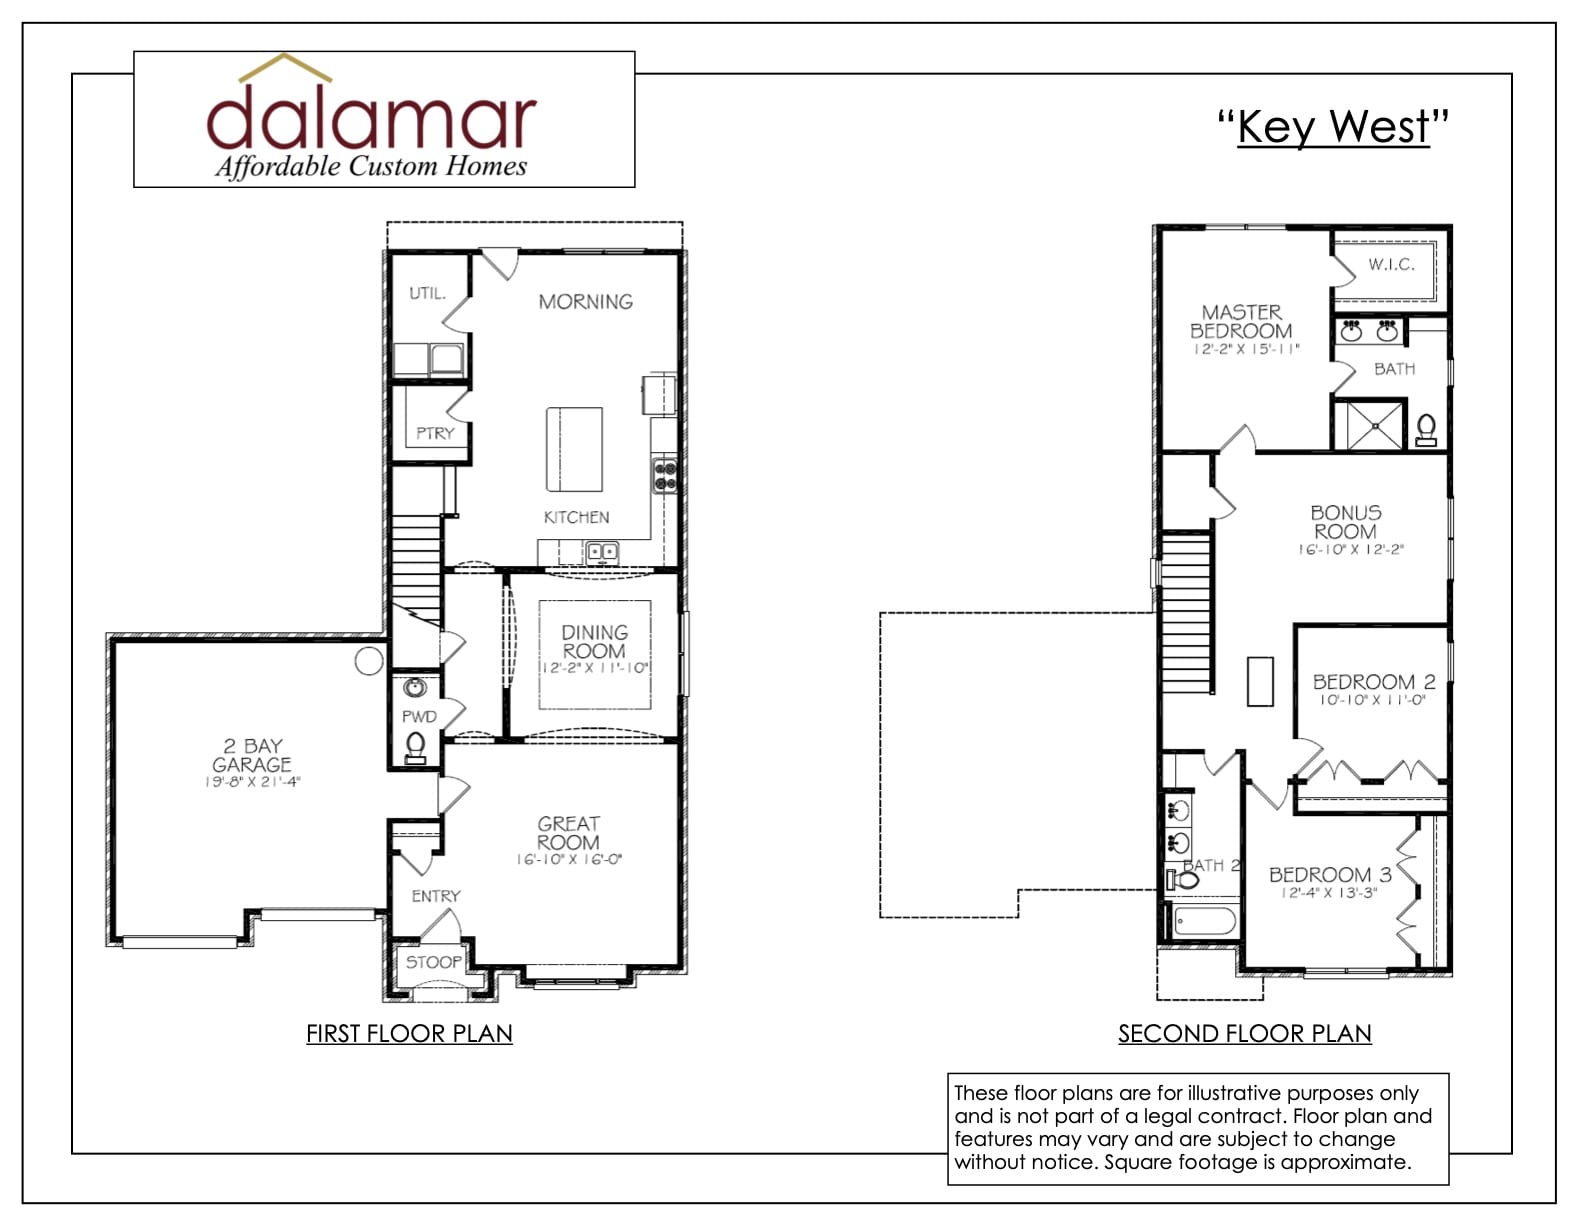 Key West Floor Plan - Luxury Homes for Sale in Murfreesboro, TN